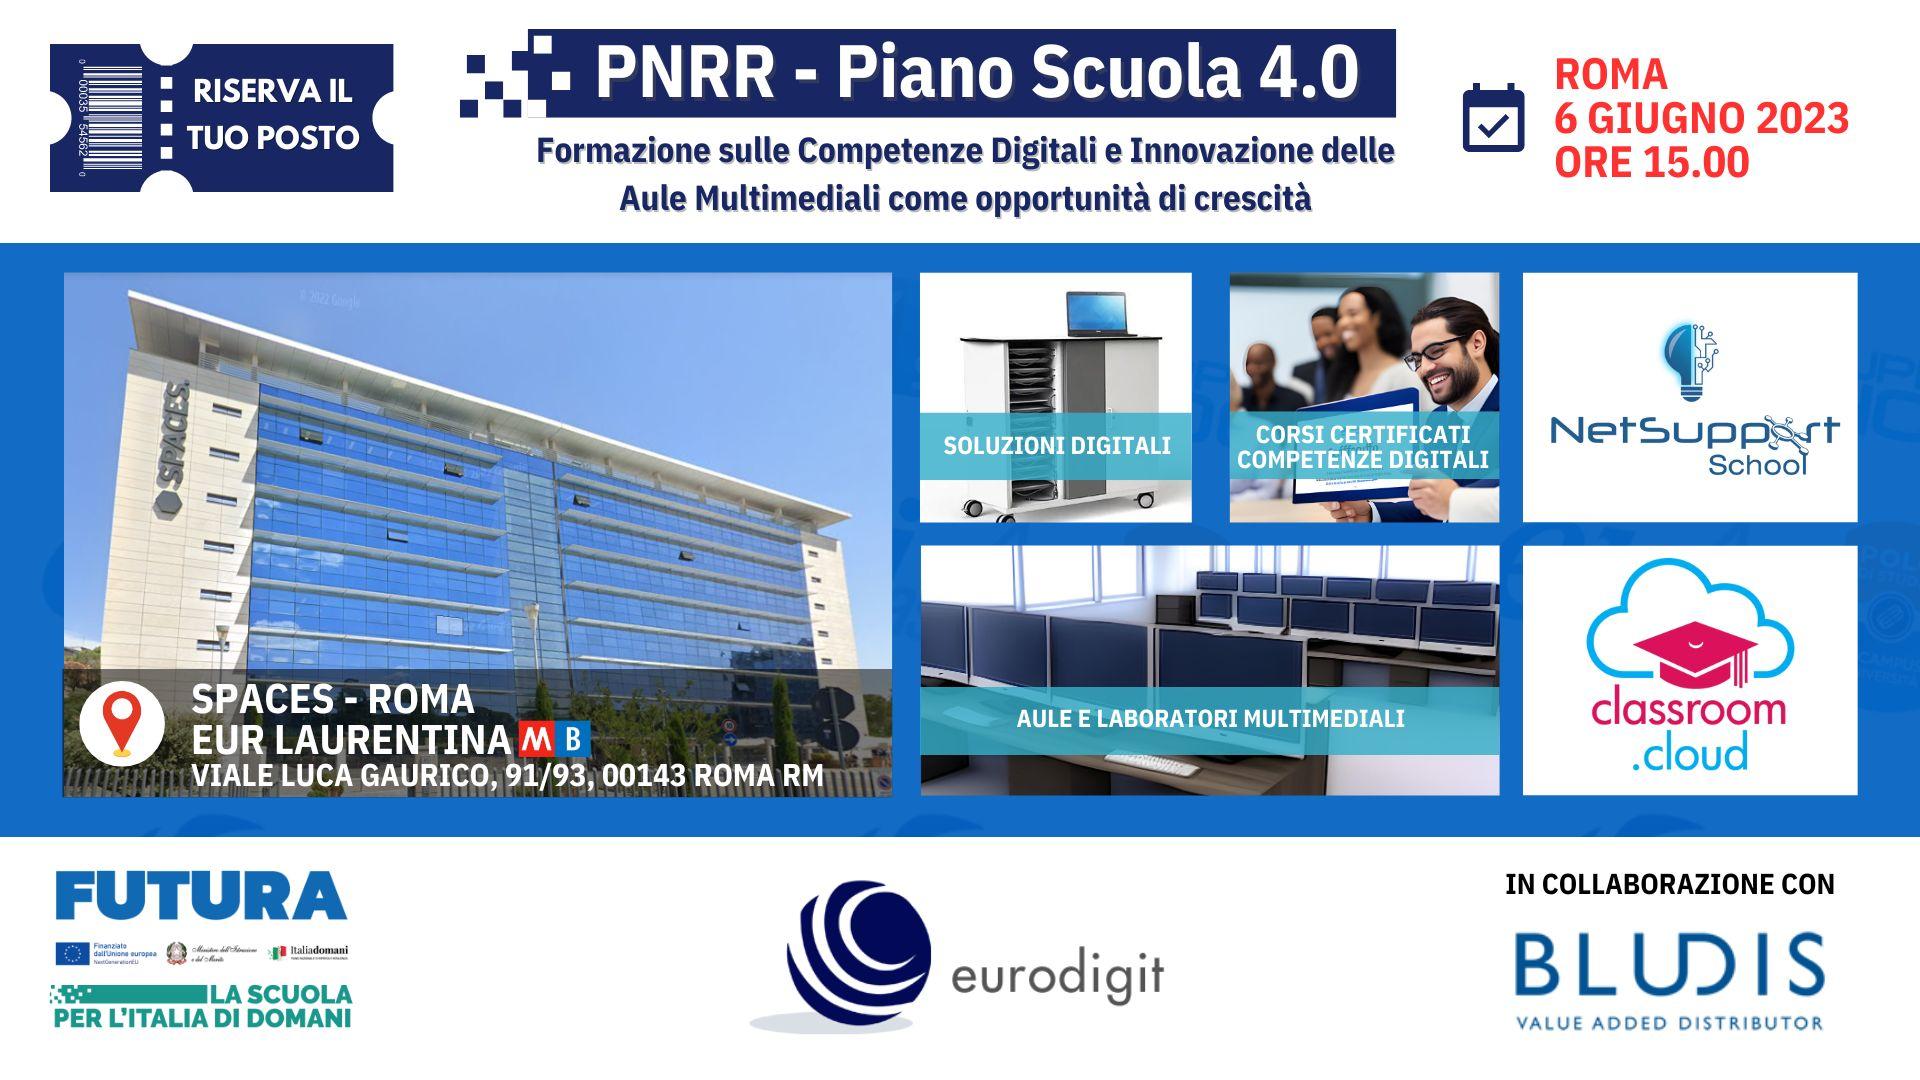 PNRR - Piano Scuola 4.0 | Eurodigit | Bludis